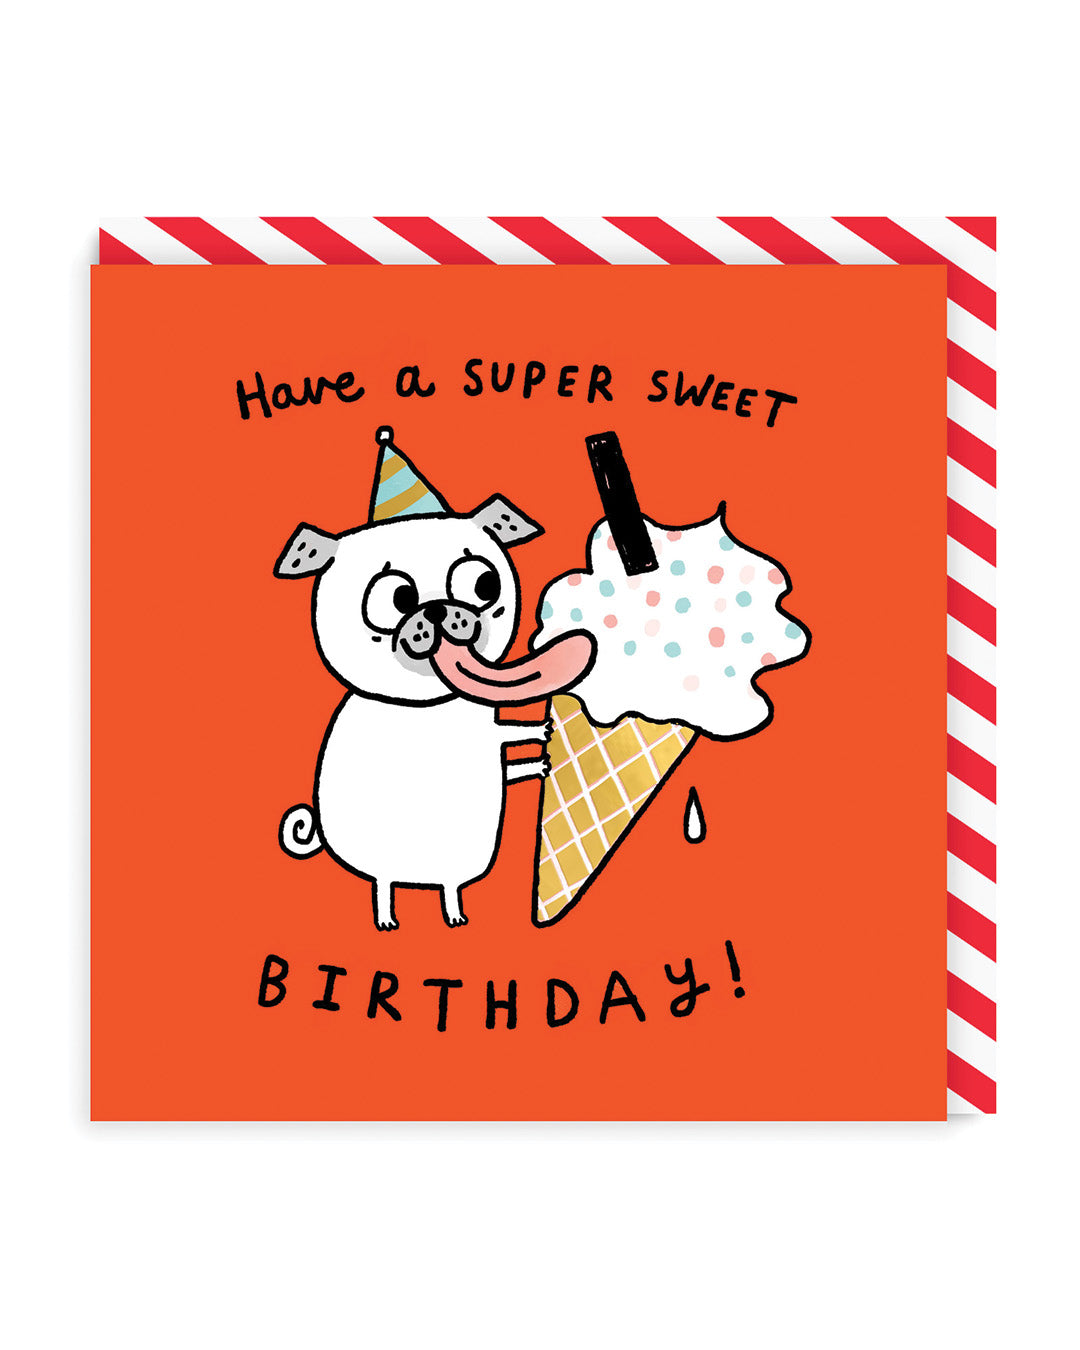 Super Sweet Birthday Square Greeting Card